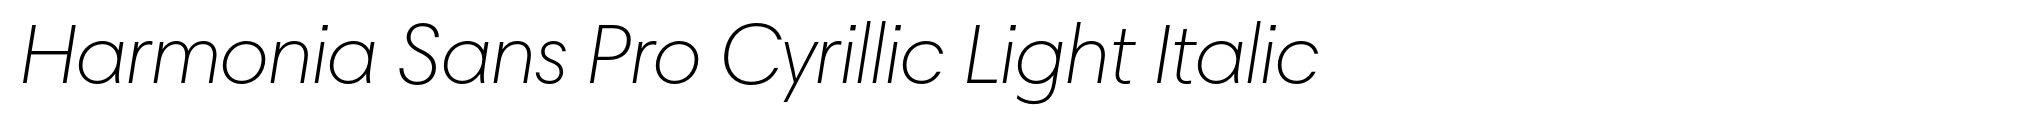 Harmonia Sans Pro Cyrillic Light Italic image